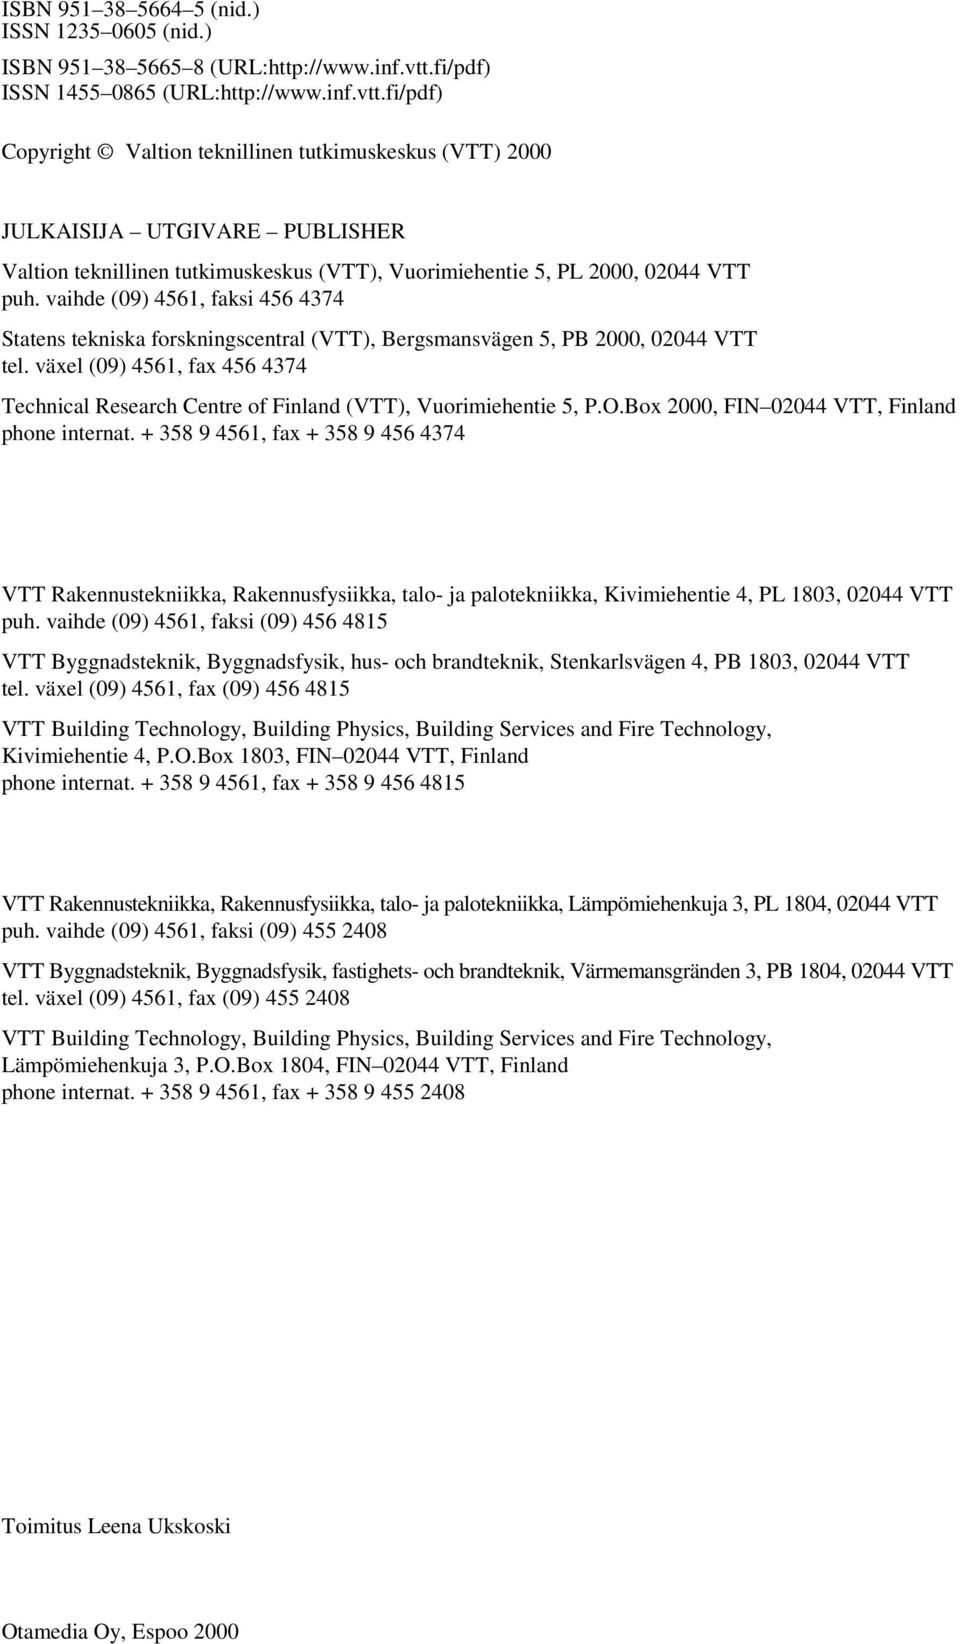 fi/pdf) Copyright Valtion teknillinen tutkimuskeskus (VTT) 2000 JULKAISIJA UTGIVARE PUBLISHER Valtion teknillinen tutkimuskeskus (VTT), Vuorimiehentie 5, PL 2000, 02044 VTT puh.